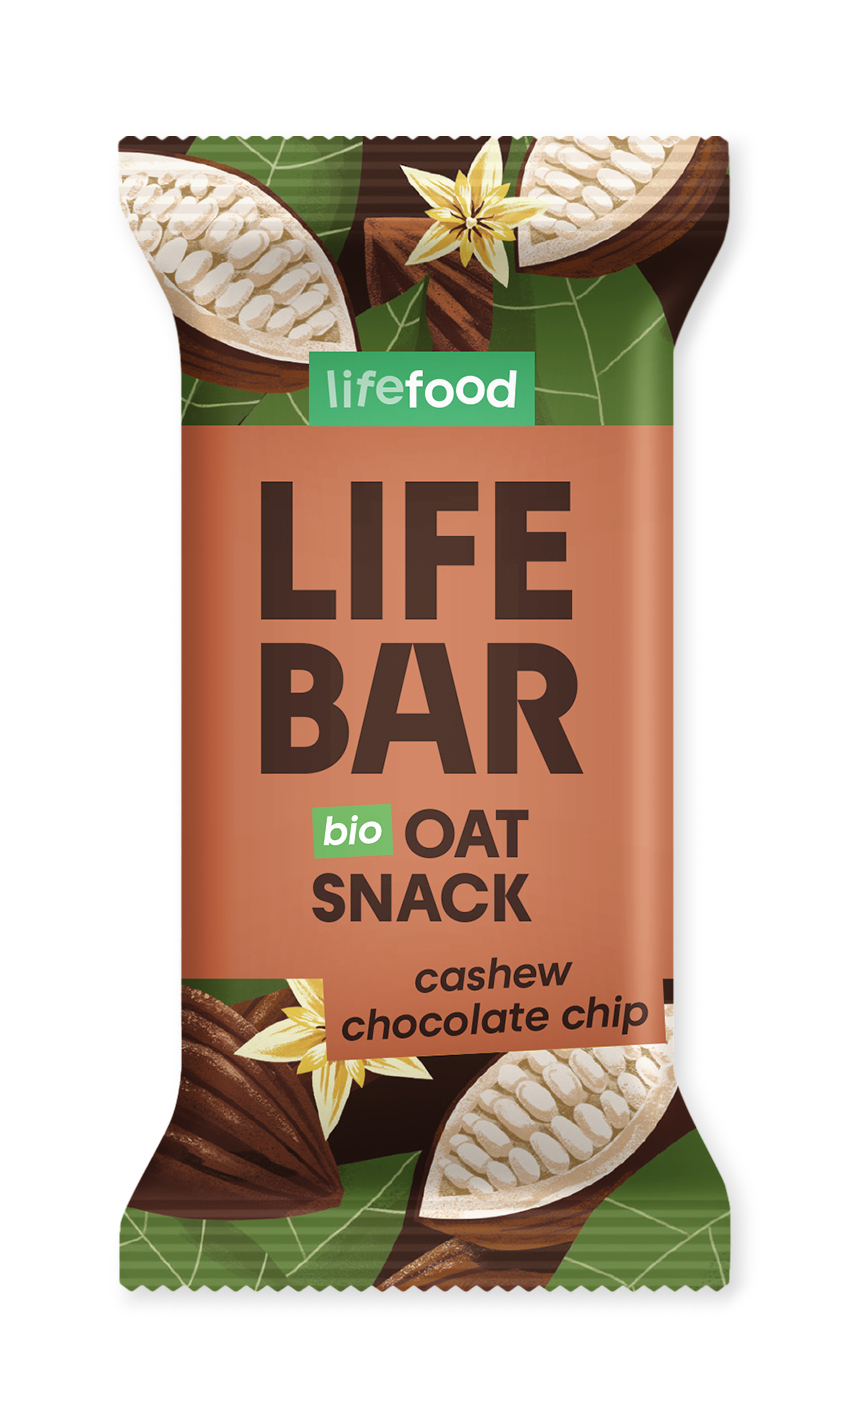 Lifefood Lifebar haverreep cashew chocolate chip bio & raw 40g